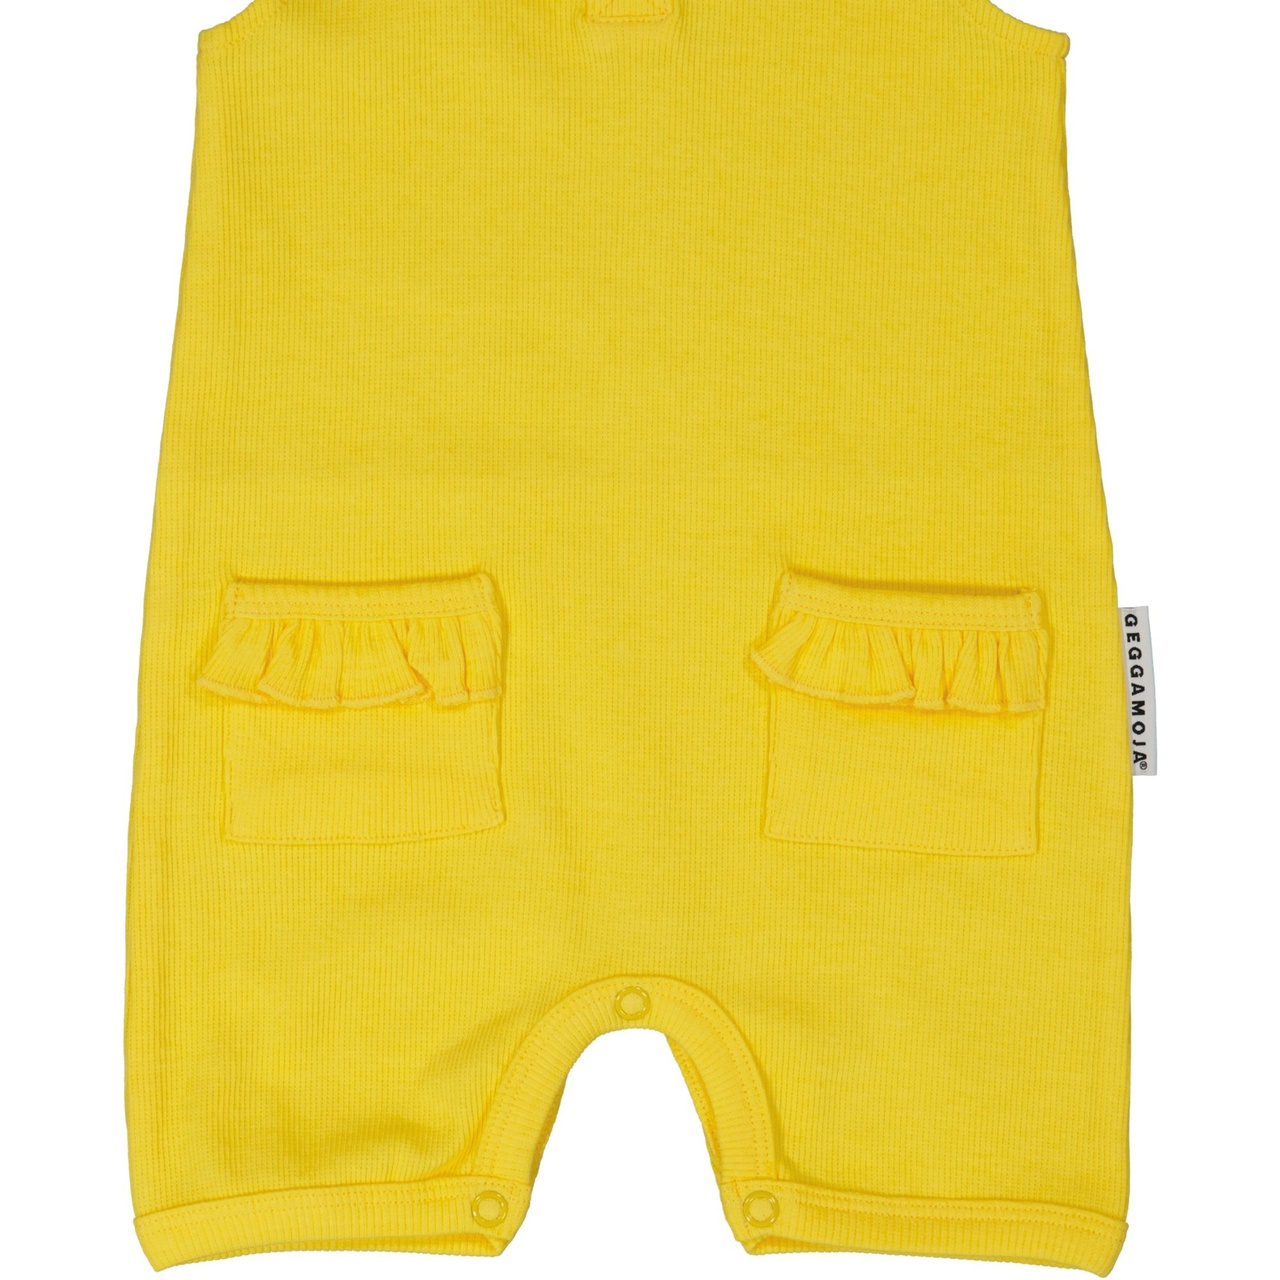 Summer suit Yellow  62/68